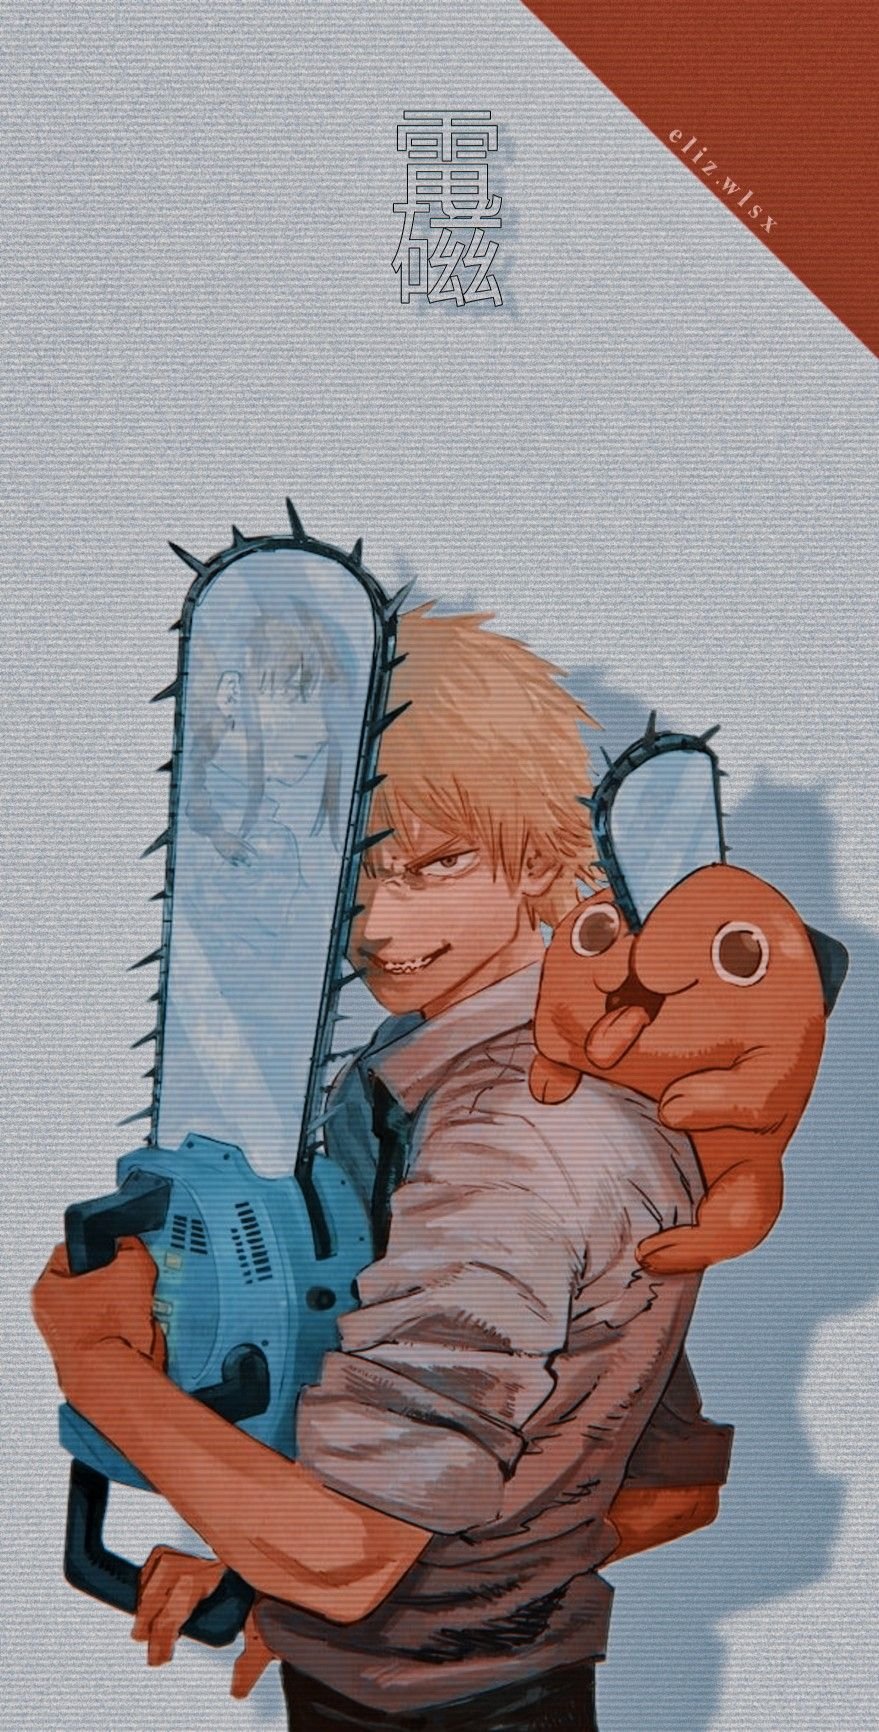 Anime Bad Boy Wallpaper